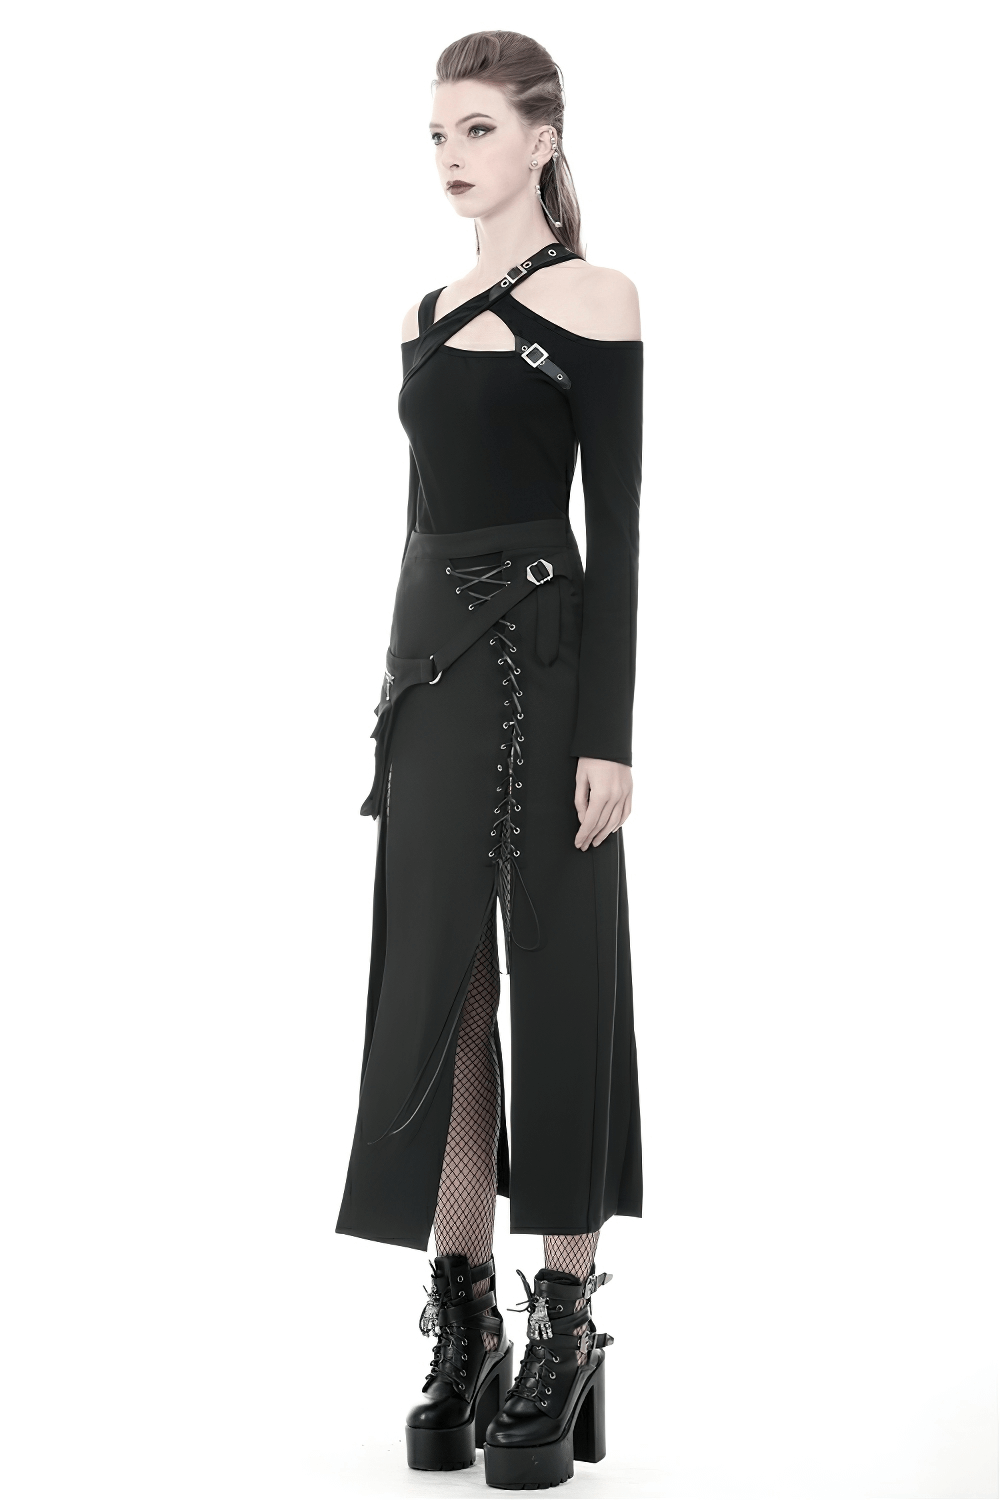 Stylish Gothic Lace-Up Metal Eyelet Skirt with Pockets